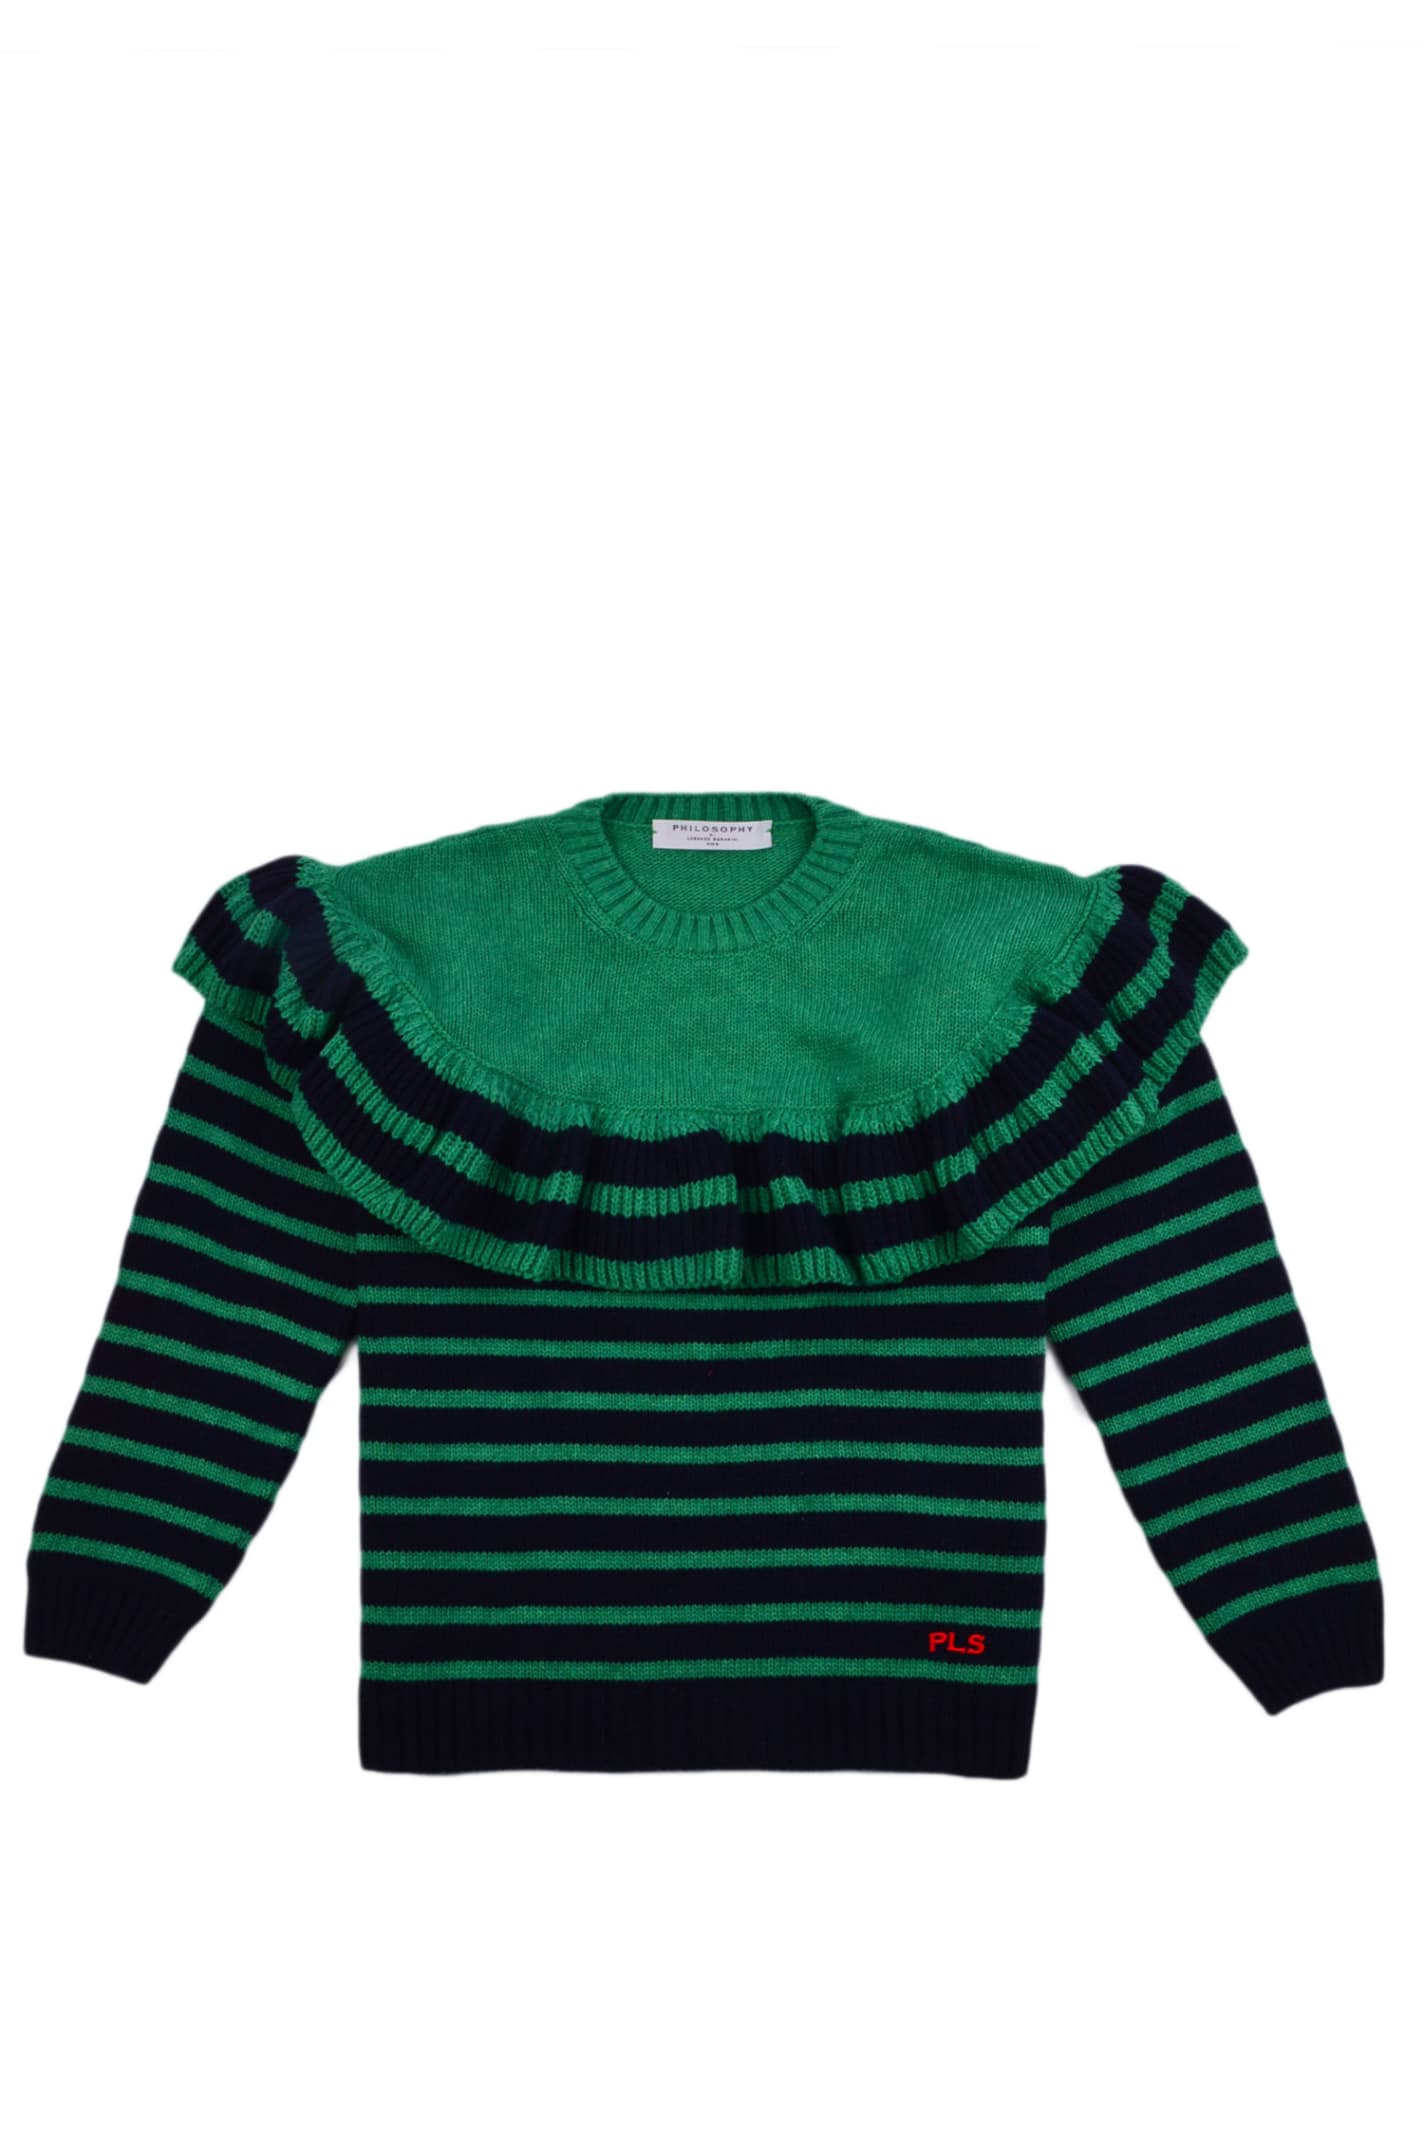 Philosophy di Lorenzo Serafini Striped Sweater With Rouches